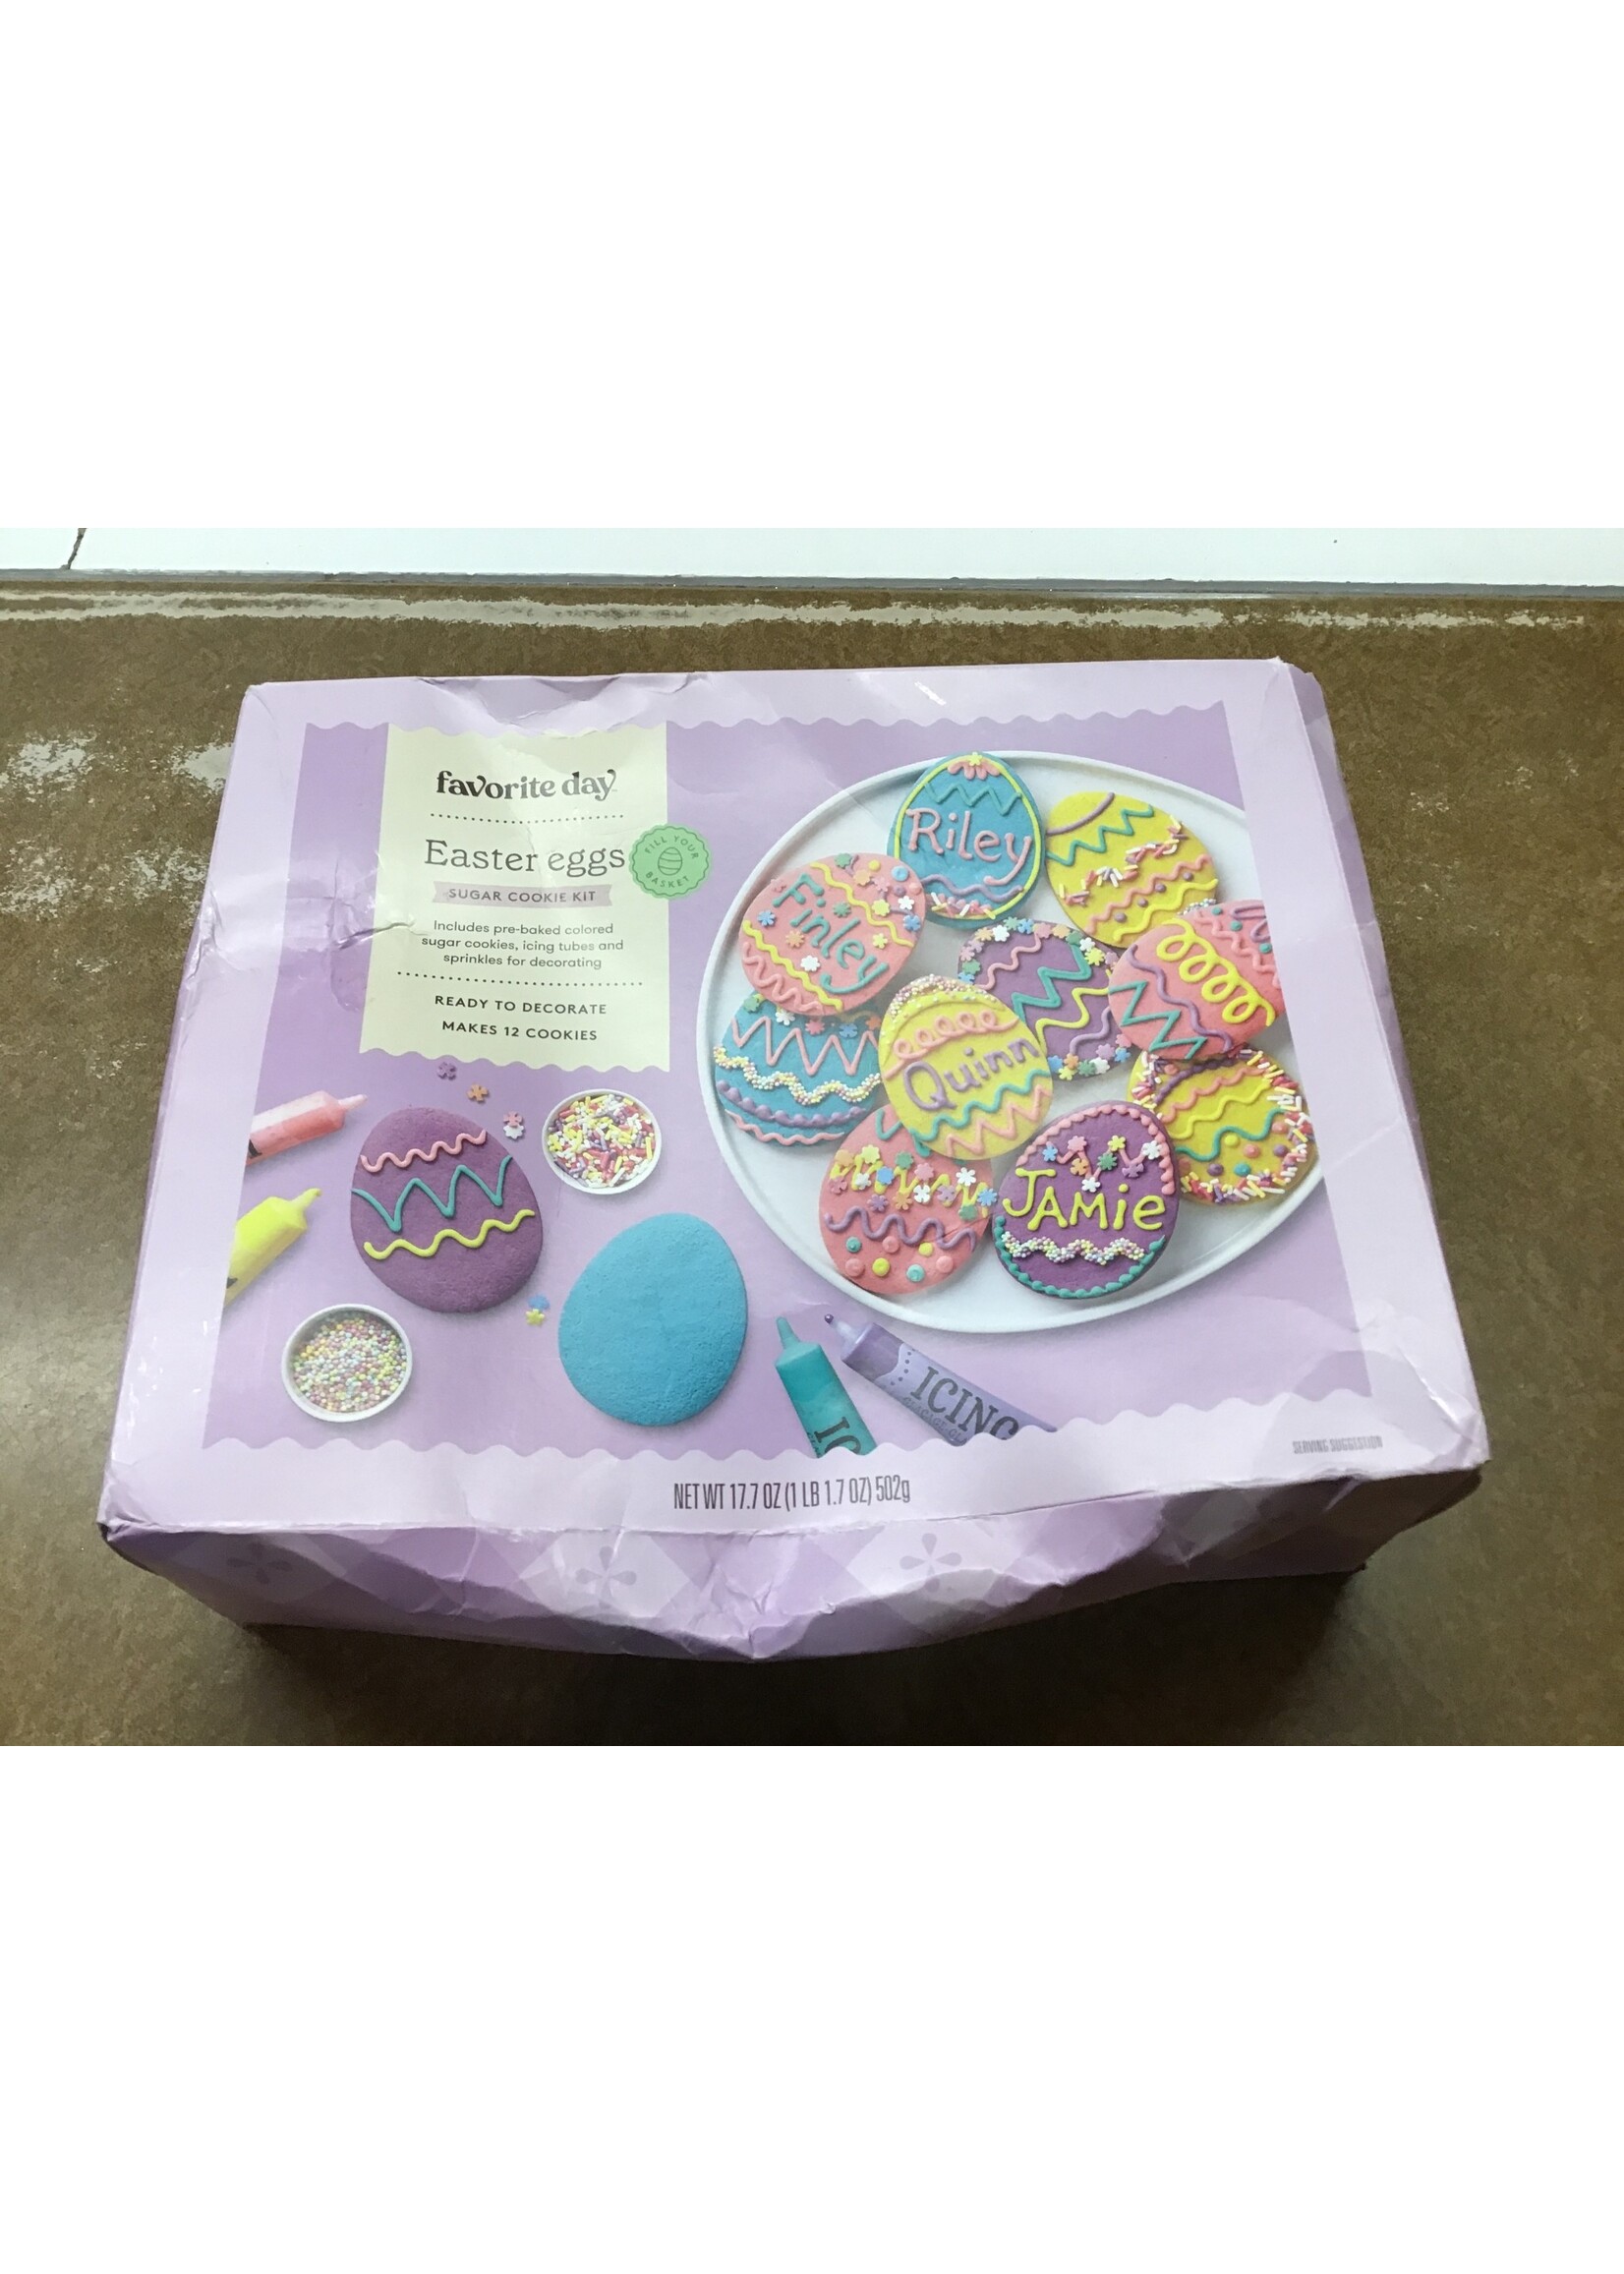 *box damage* Easter Egg Shaped Sugar Cookie Decorating Kit - 9.68oz/12ct - Favorite Day